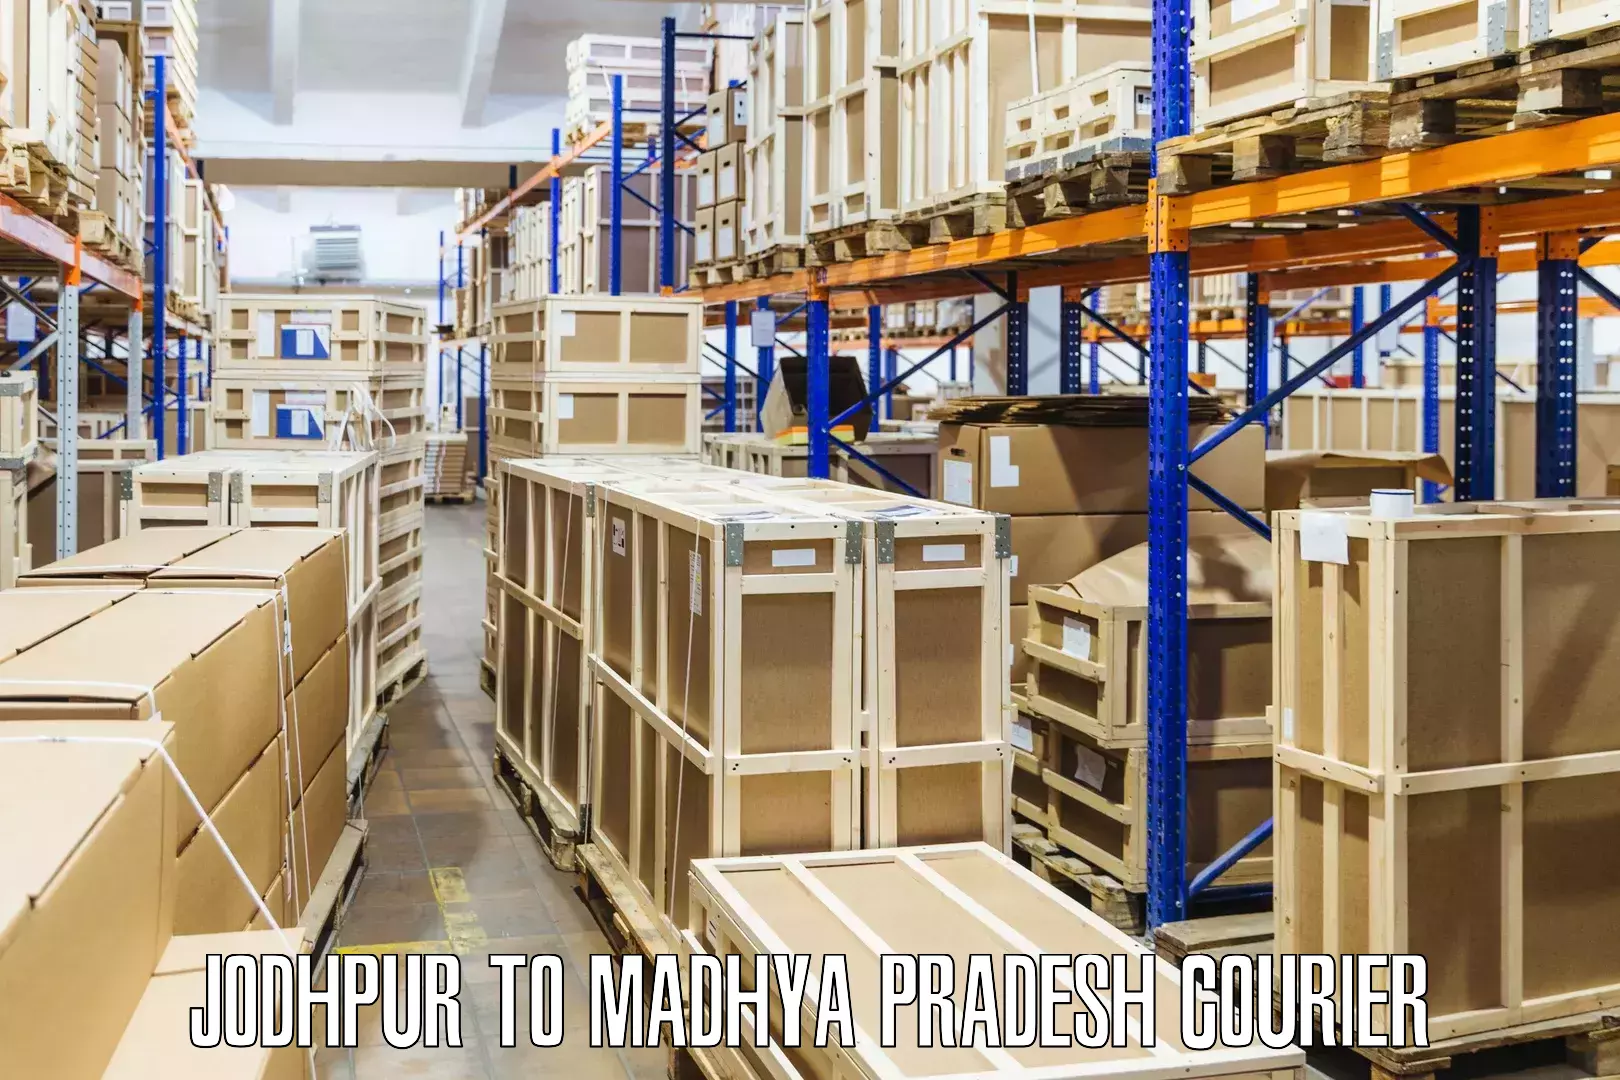 Urgent courier needs Jodhpur to Rehli